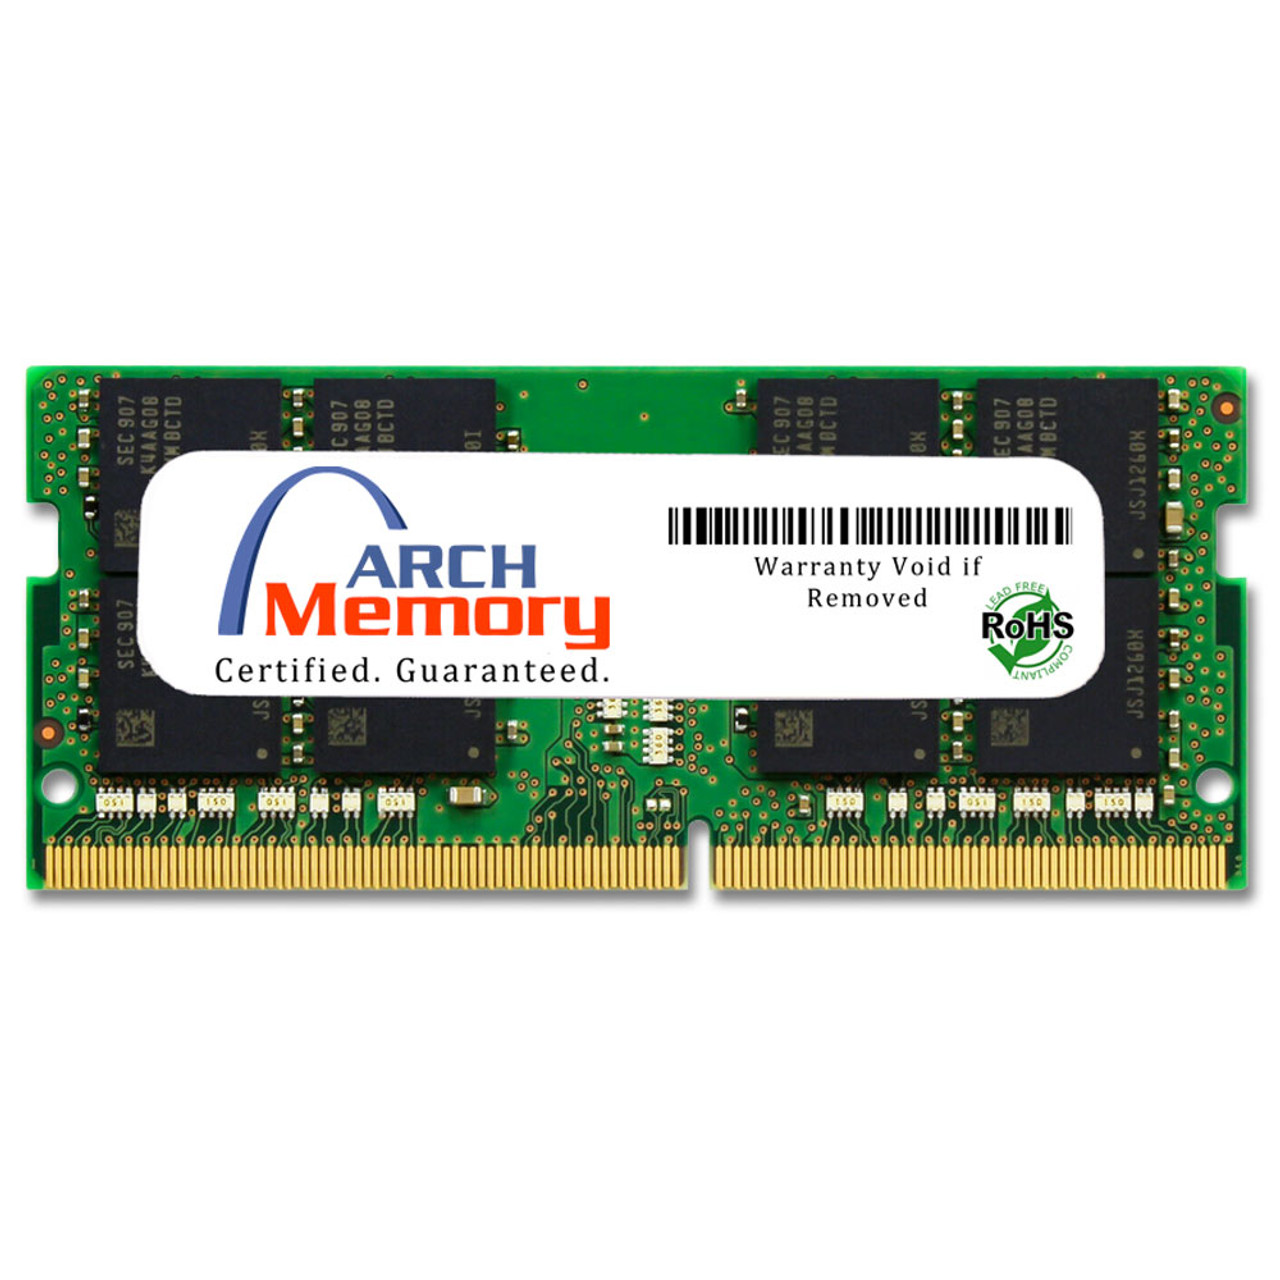 eBay*16GB 260-Pin DDR4-2400 PC4-12900 Sodimm (2Rx8) RAM